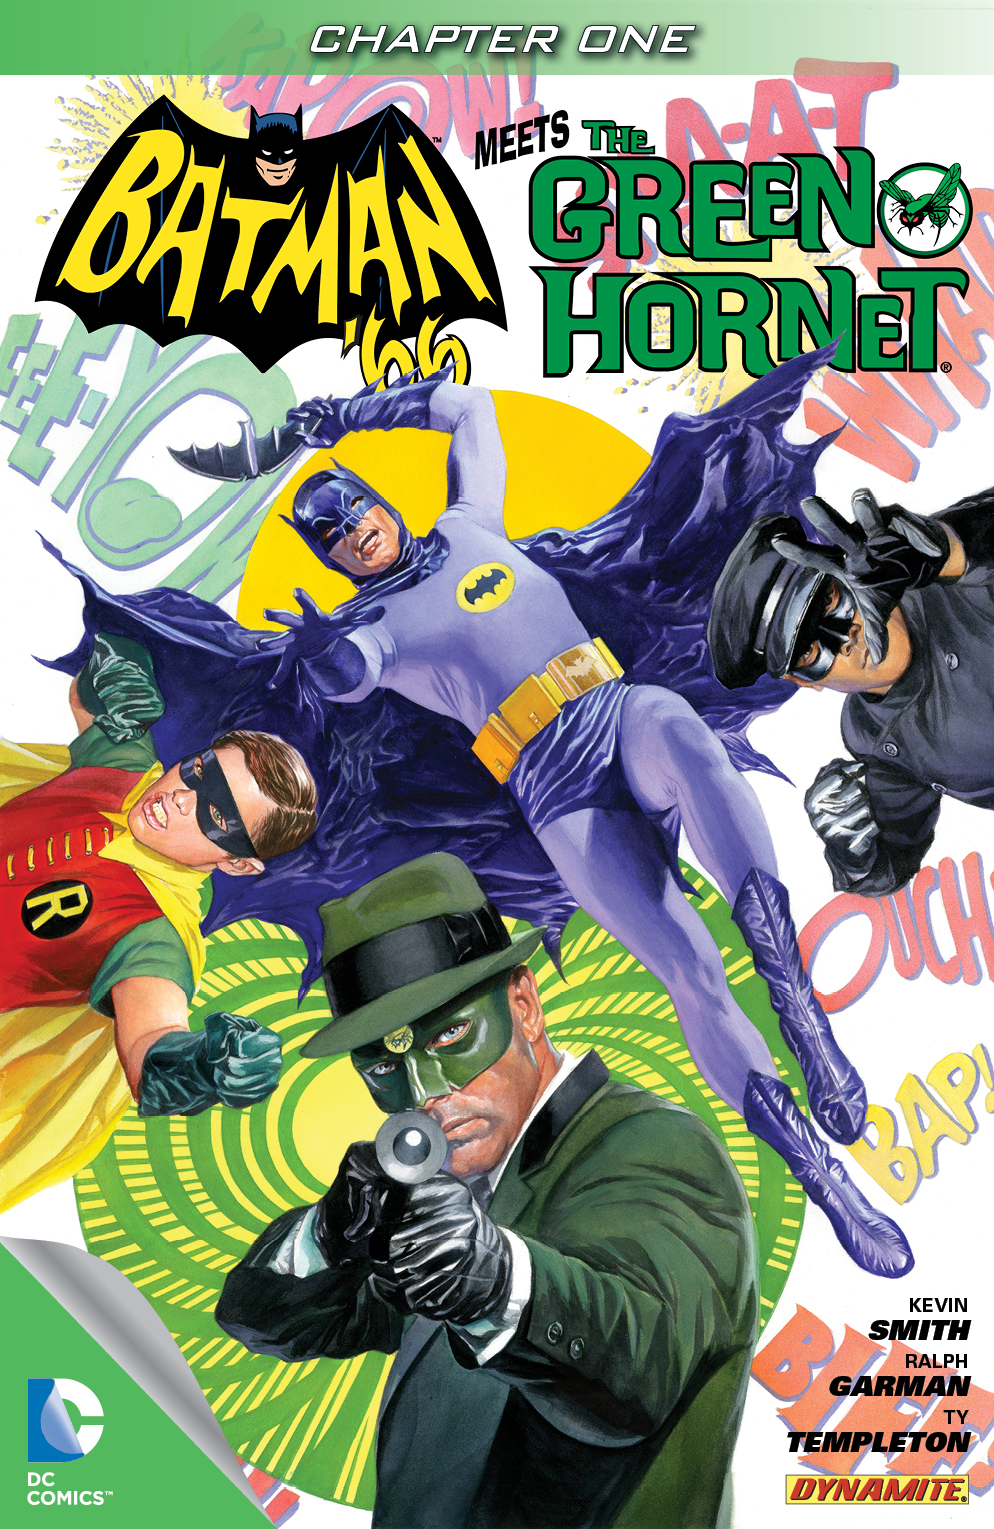 Batman '66 Meets the Green Hornet #1 preview images